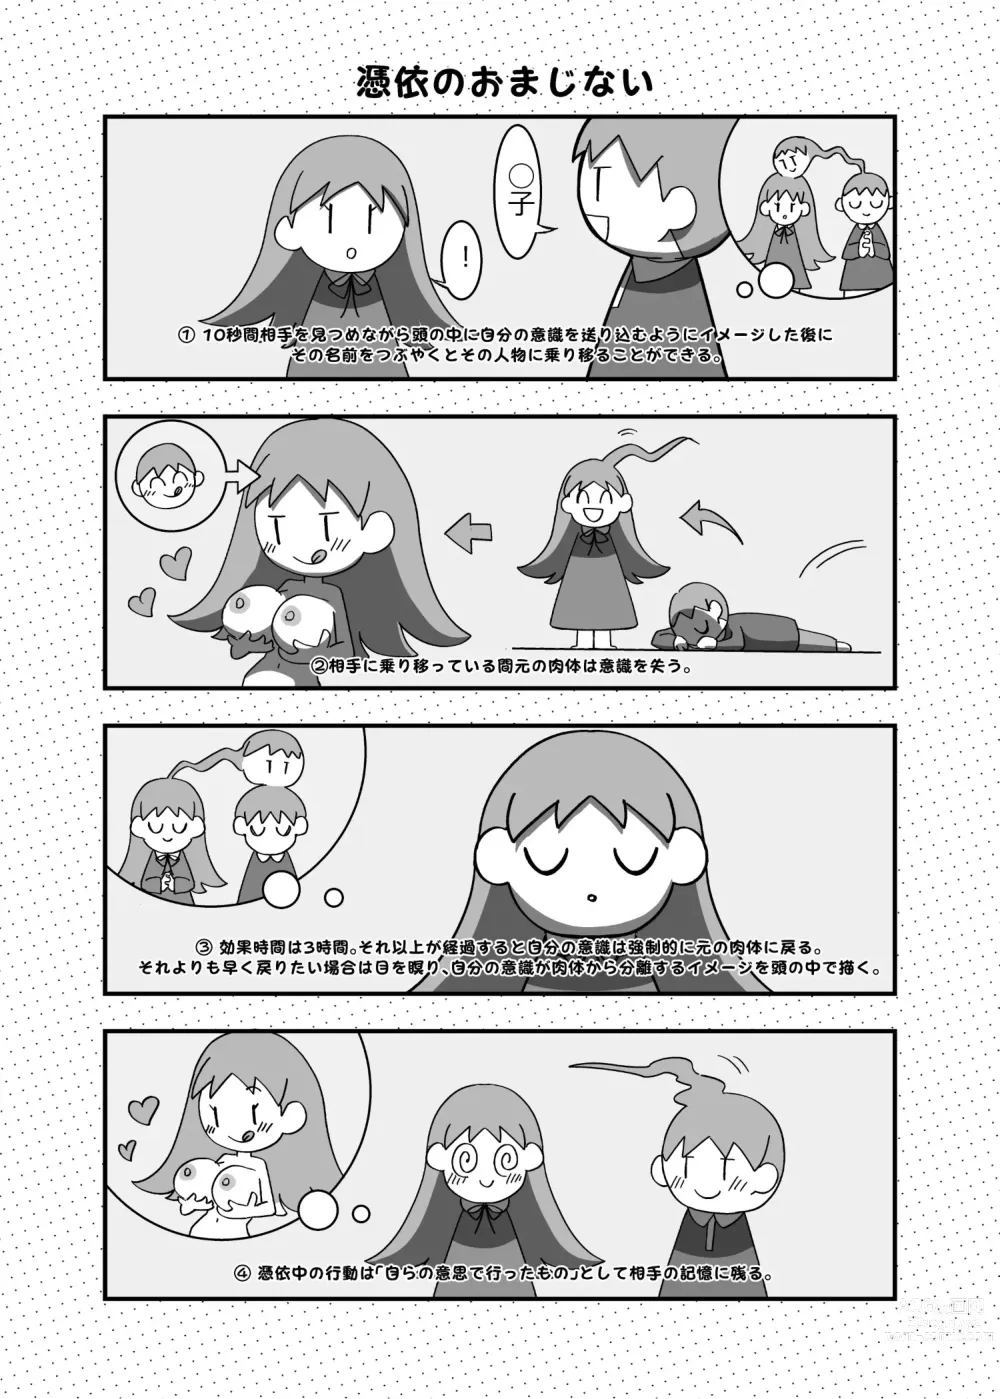 Page 3 of doujinshi Hyoui no Omajinai